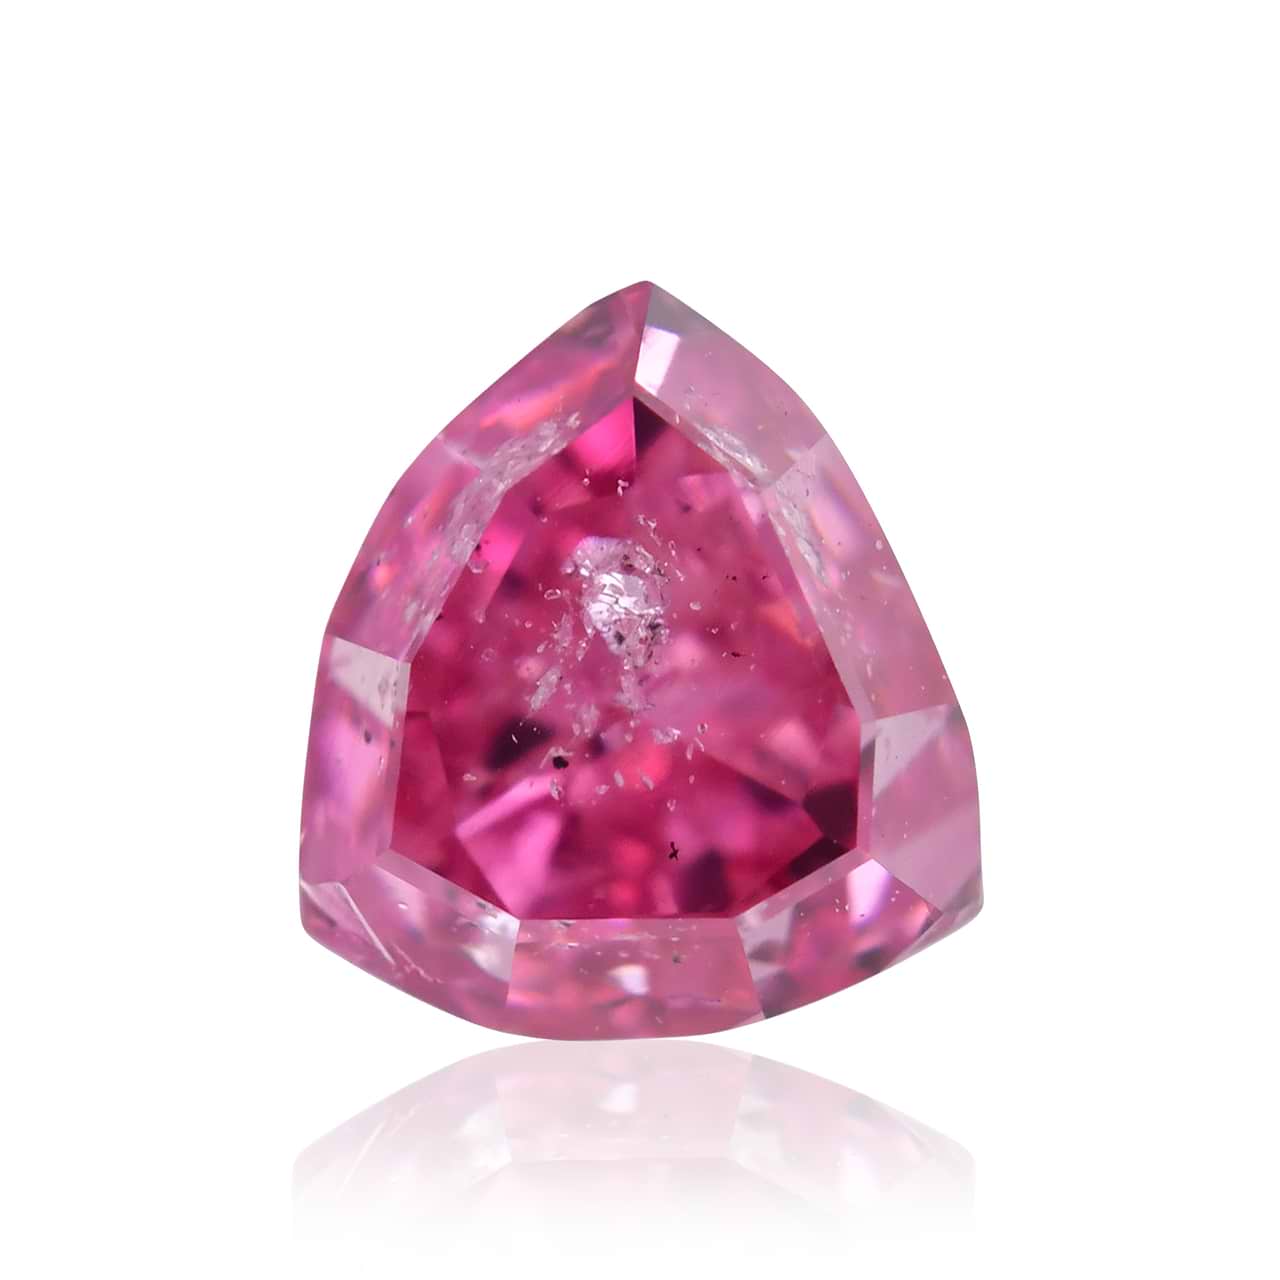 0.76 carat, Fancy Vivid Purplish Pink Diamond, Triangle Shape, (I1)  Clarity, GIA, SKU 409043